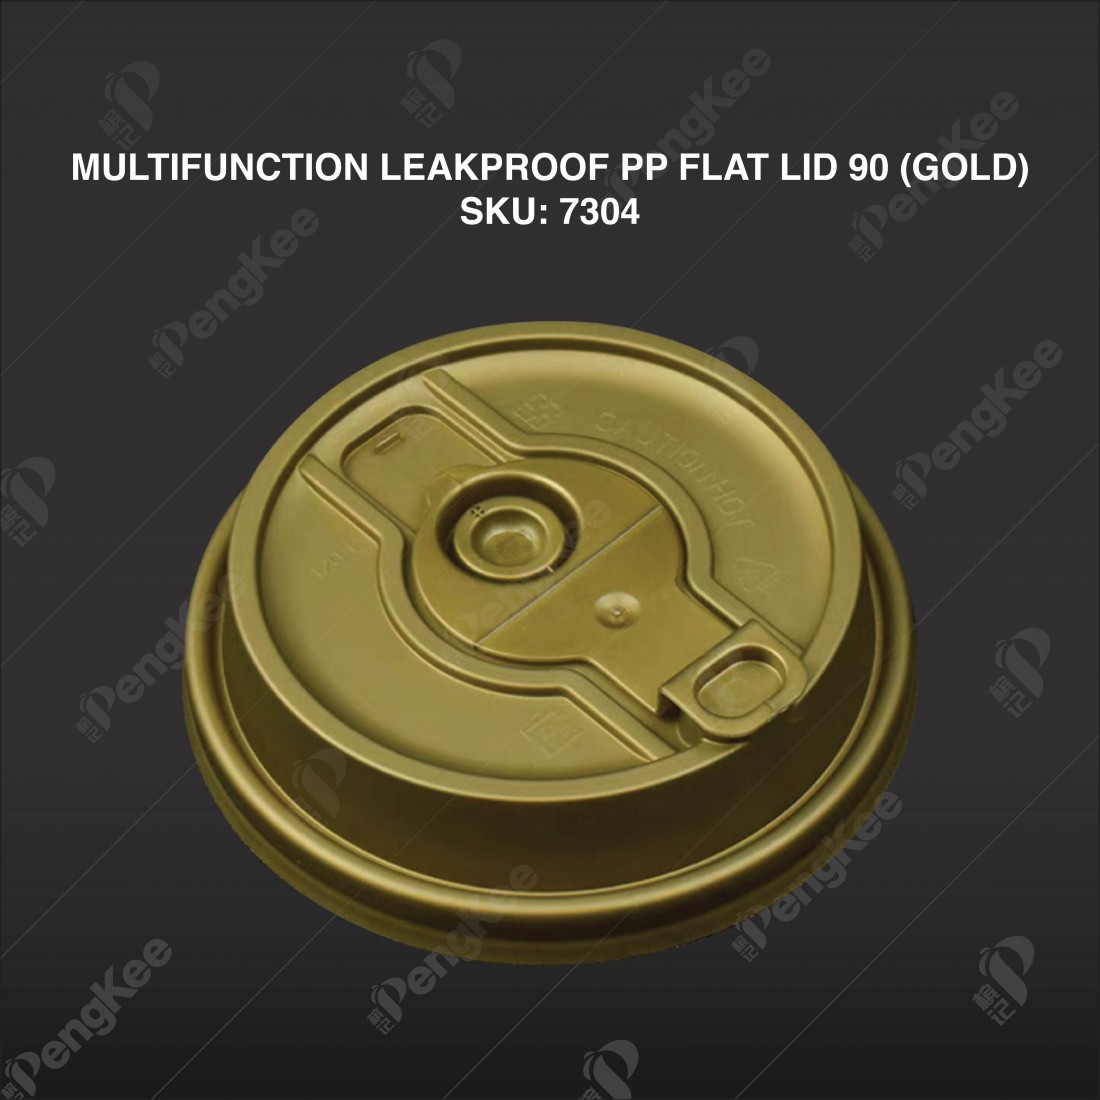 MULTIFUNCTION LEAKPROOF PP FLAT LID 90 (GOLD)